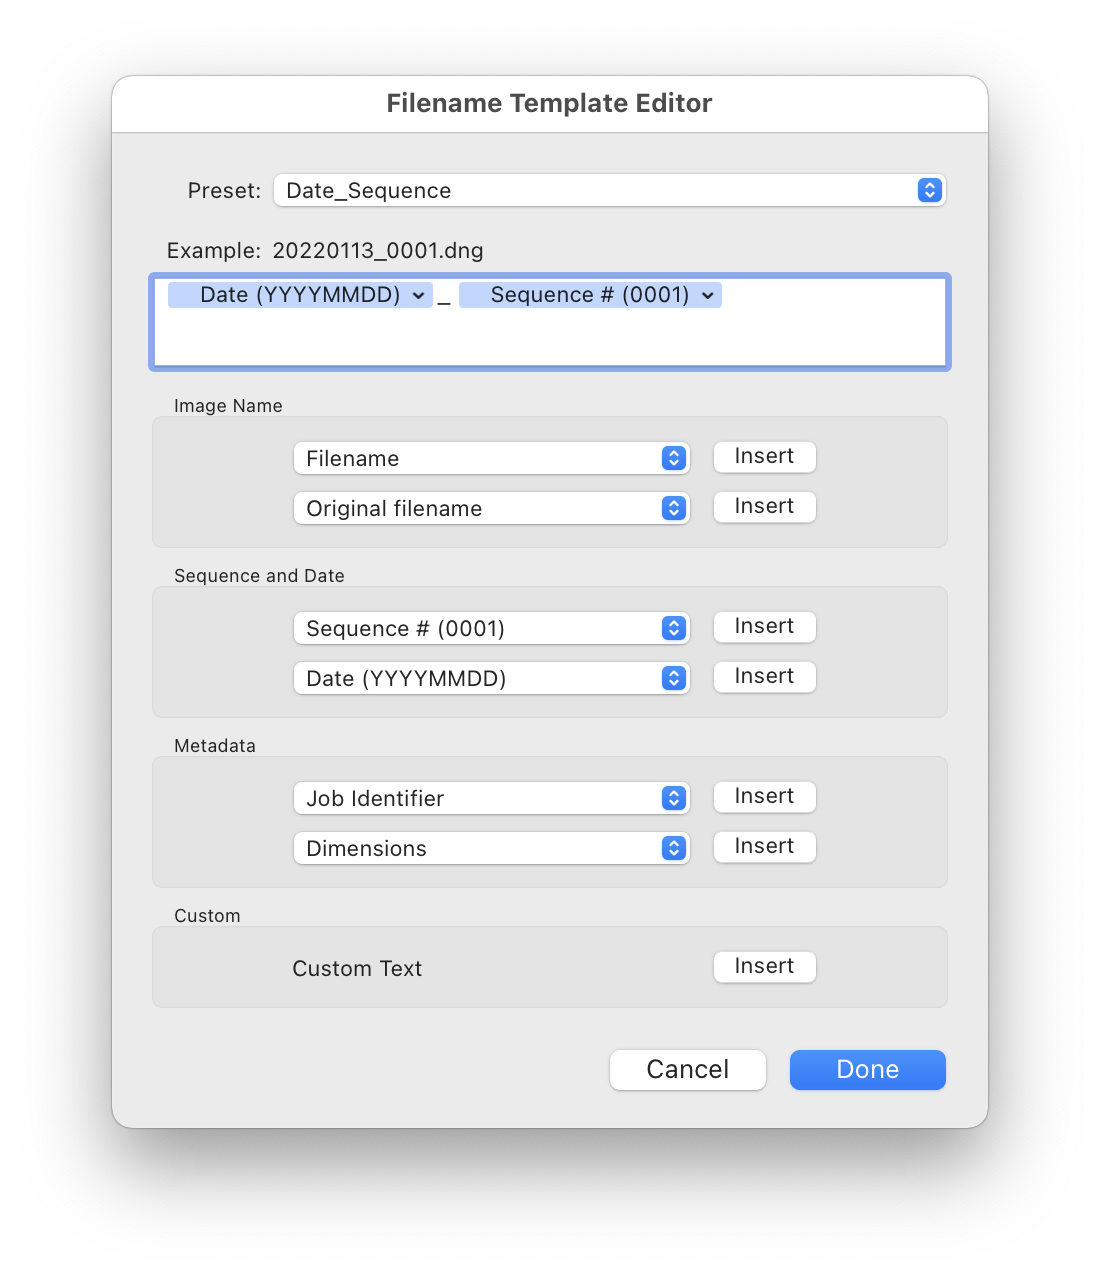 Filename template editor